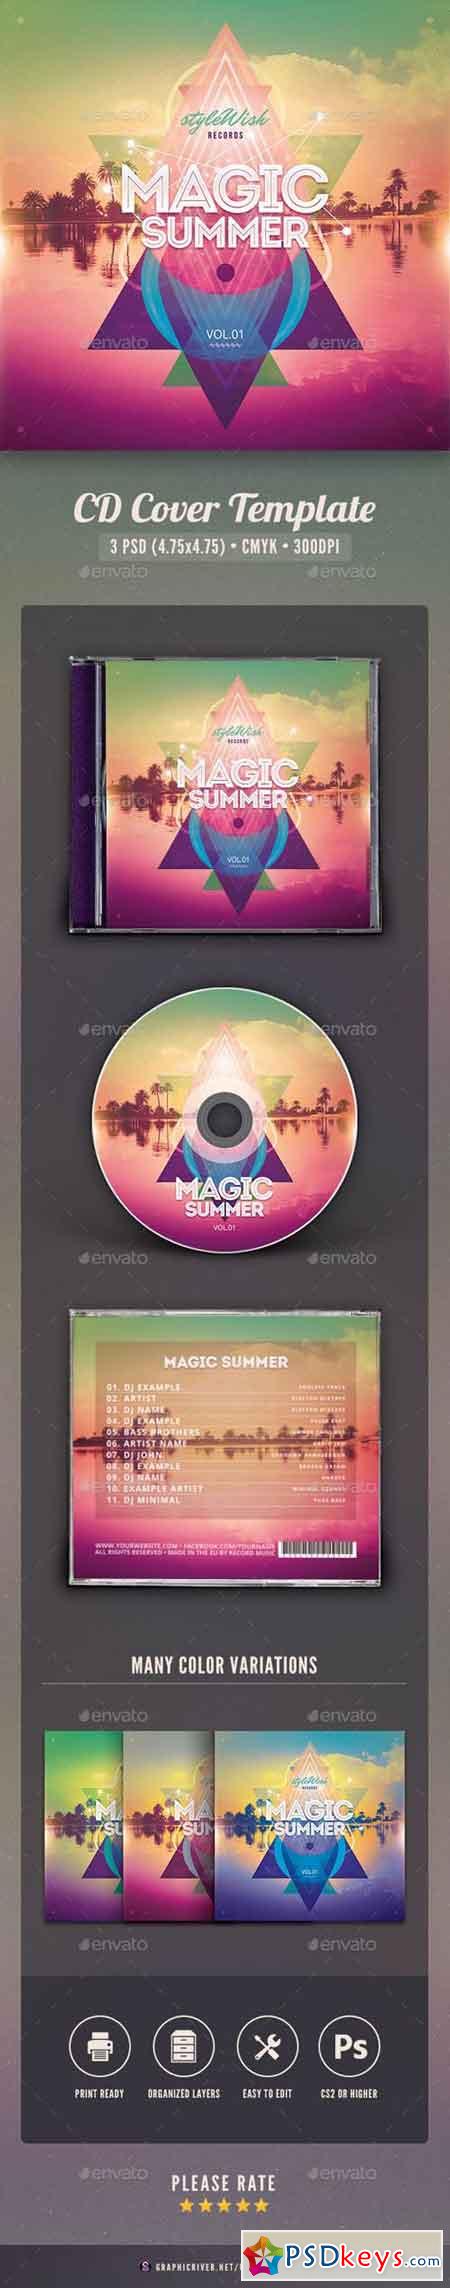 Magic Summer CD Cover Artwork 16181480